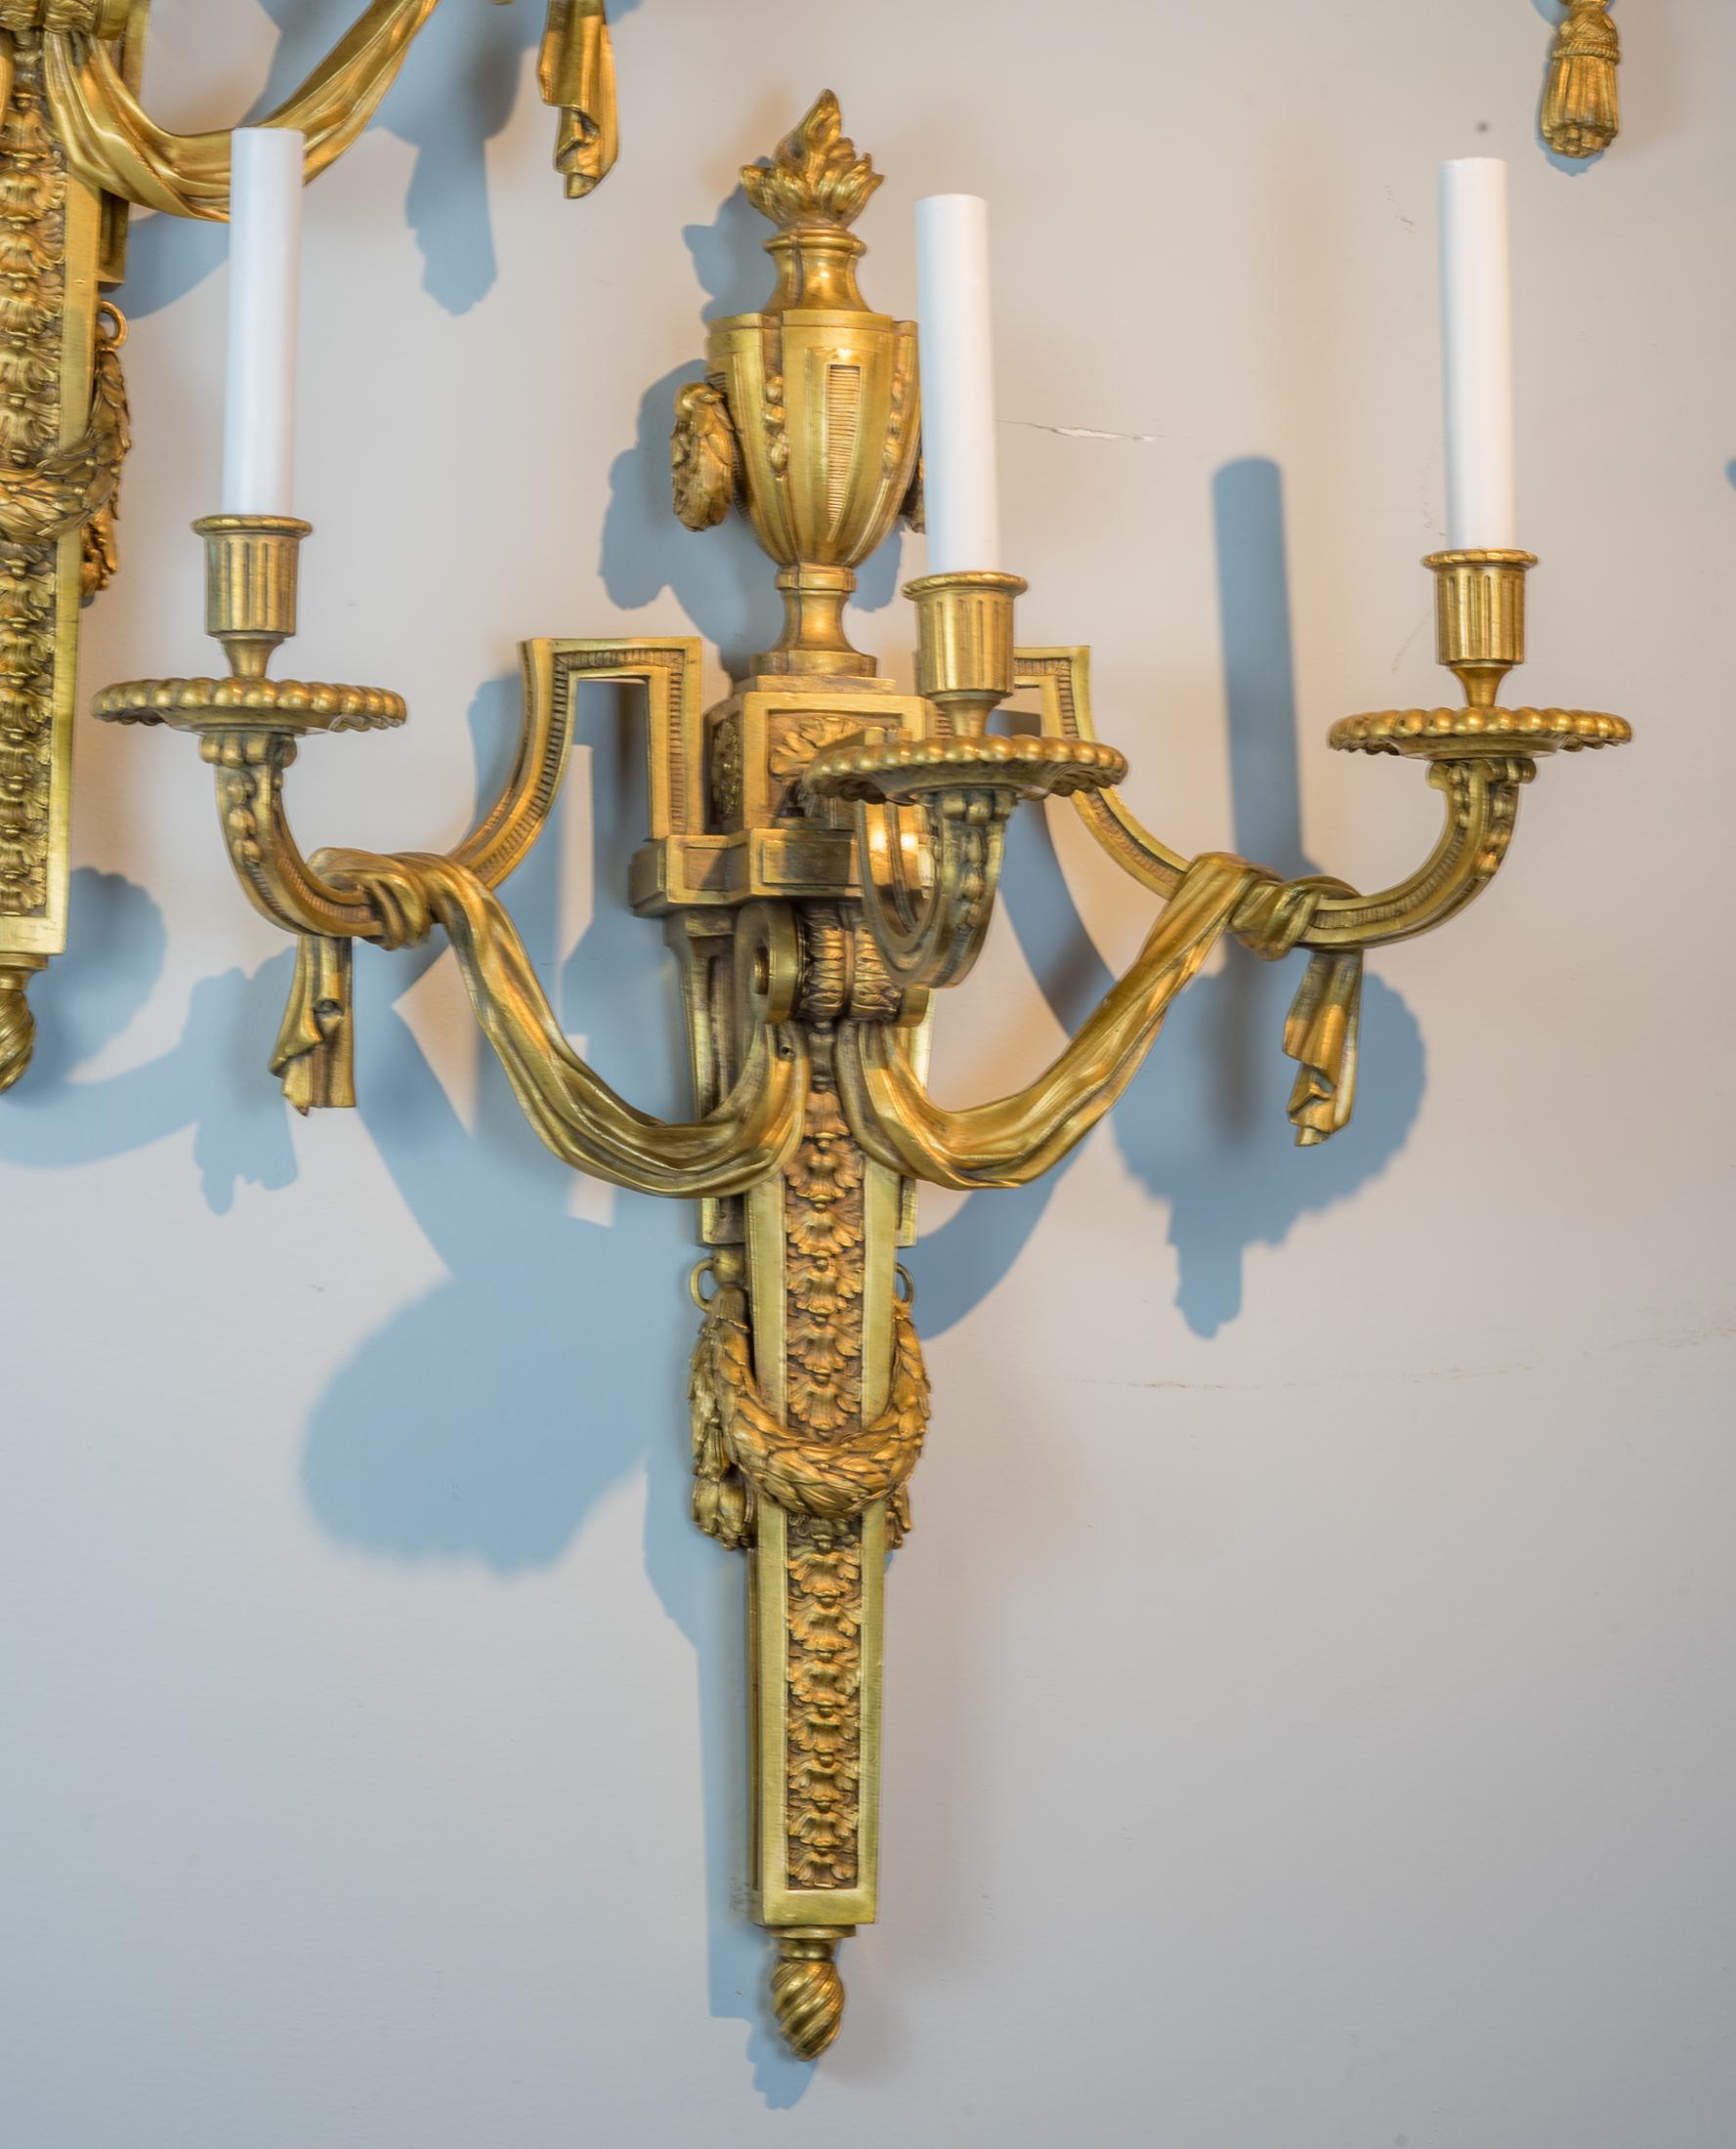 Hochwertiges Paar dreiflammiger Wandleuchter aus vergoldeter Bronze im Louis-XVI-Stil

Herkunft: Französisch
Datum: 19. Jahrhundert
Abmessung: 25 1/2 Zoll x 20 1/2 Zoll.